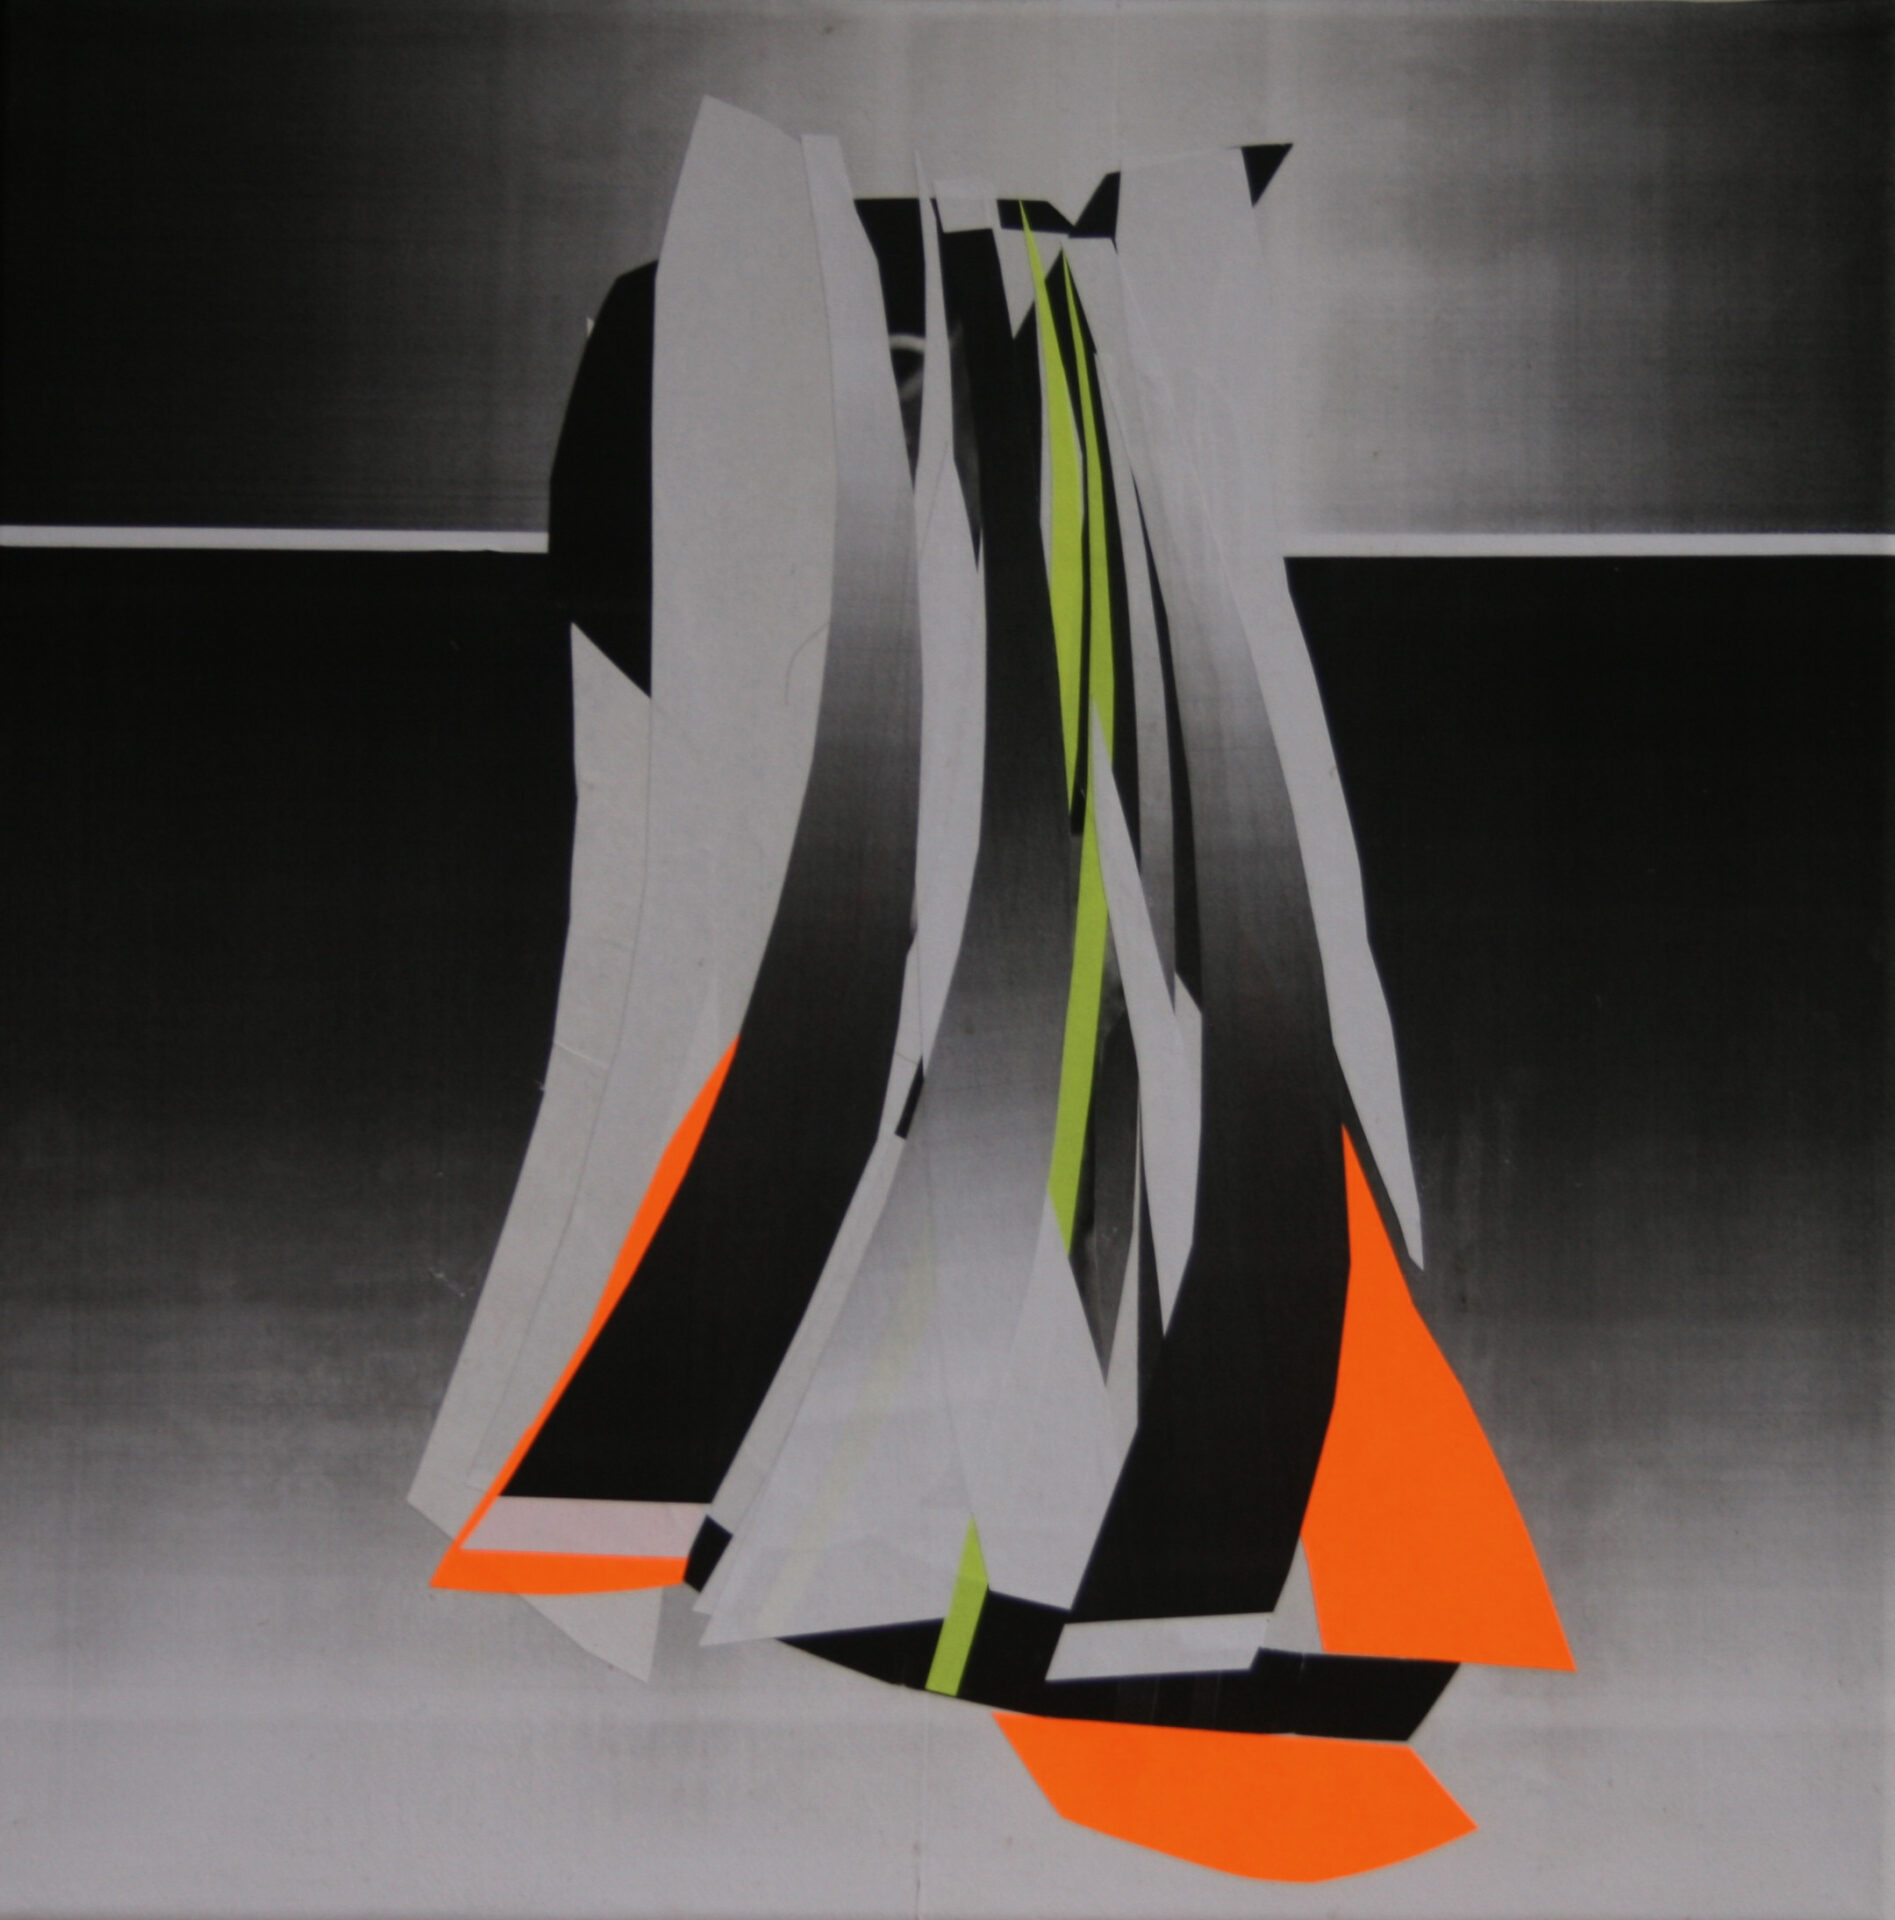 Daniel Beer, INFINITE ACTION on paper, 19-05, 40 x 40 cm, Papier auf Leinwand, 2019